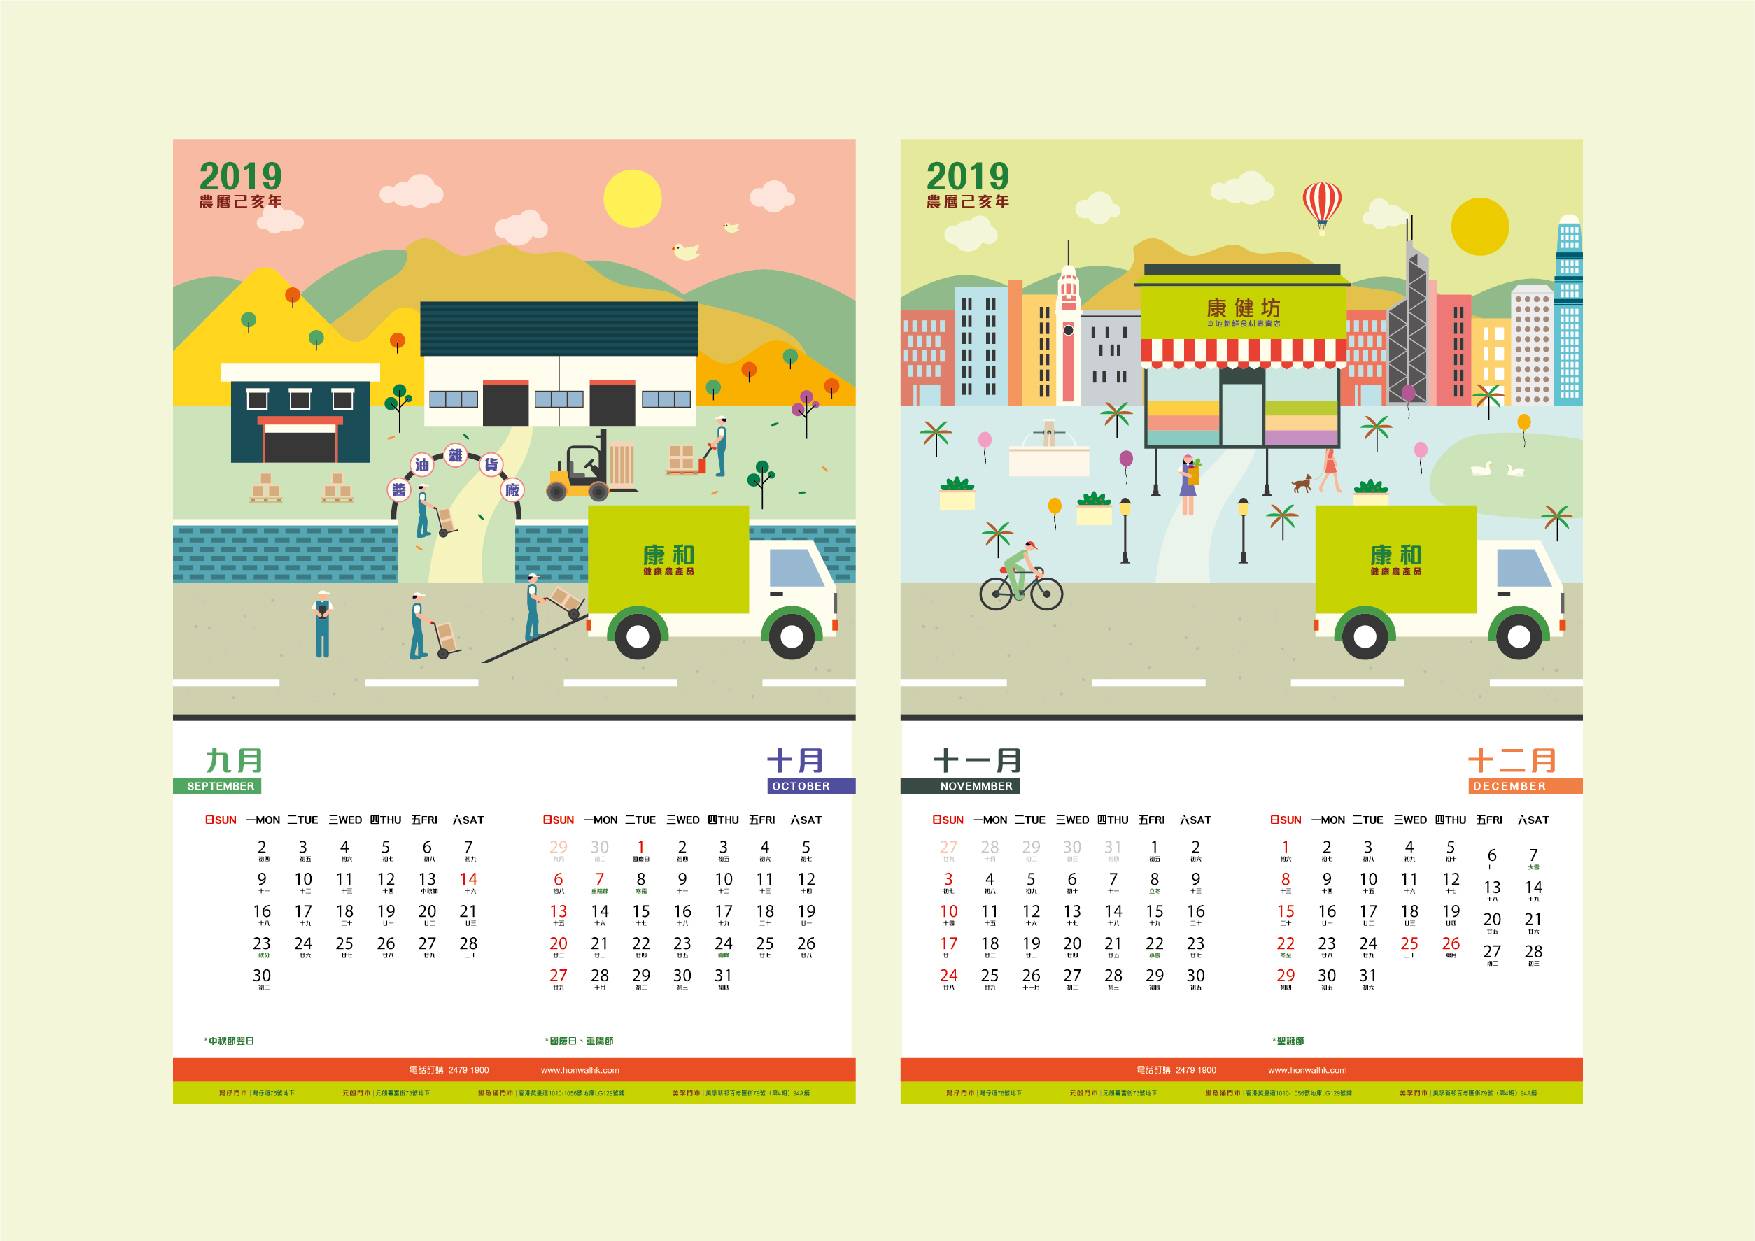 Ka Mei Chicken rebranding for calendar design month 9-12